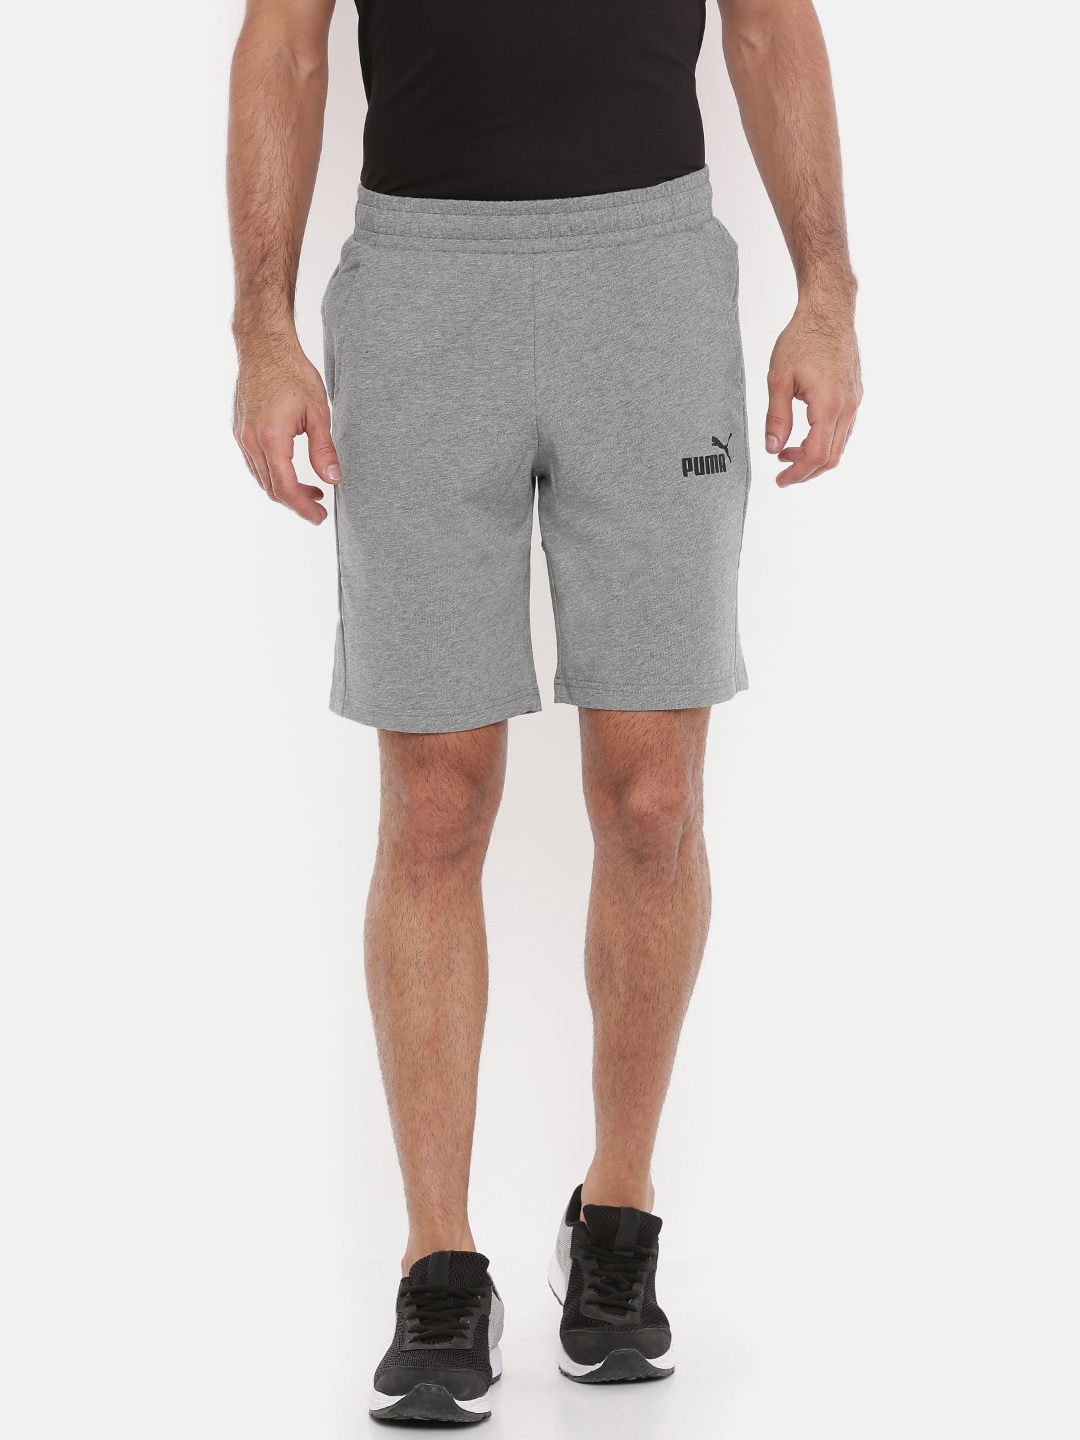 puma sweat shorts mens